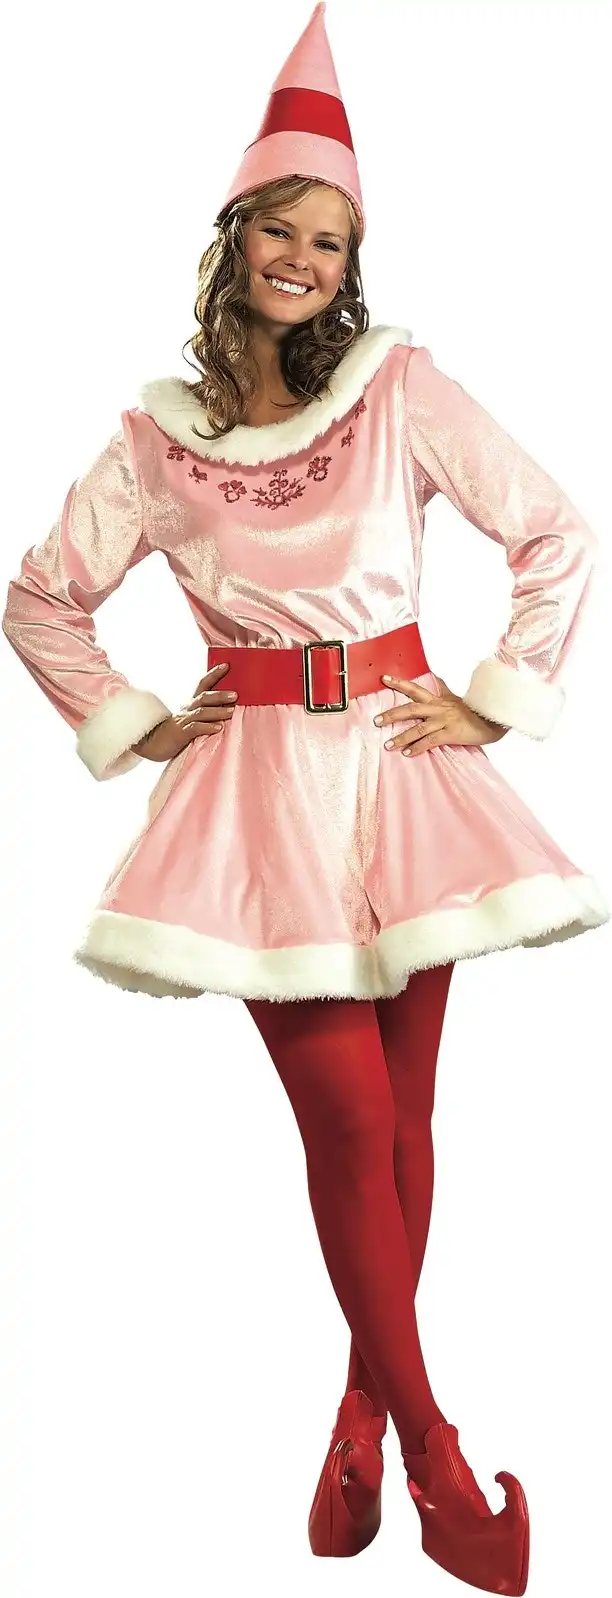 Marvel Jovie Elf Deluxe Christmas Elves Costume Dress Up Women's Size Standard